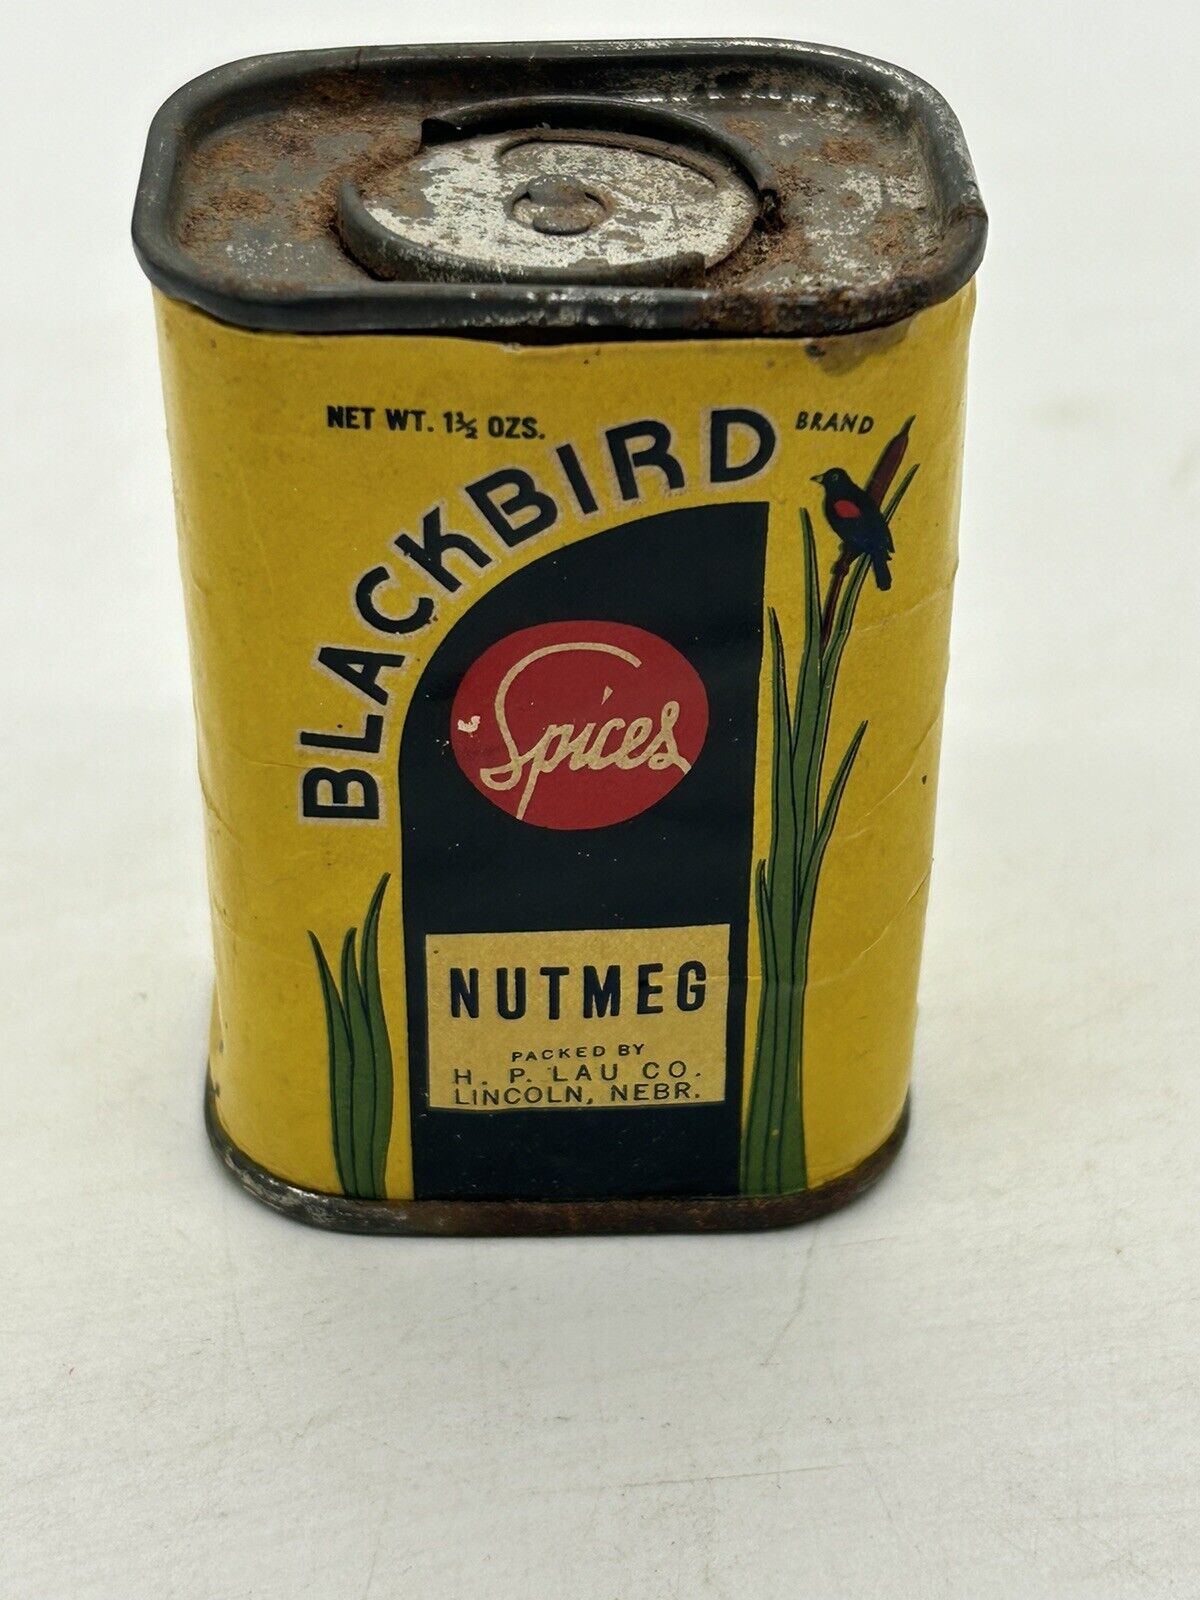 Blackbird Spices H. P. LAU Co. Lincoln  Nebr. Nutmeg Spice Tin Can Nebraska